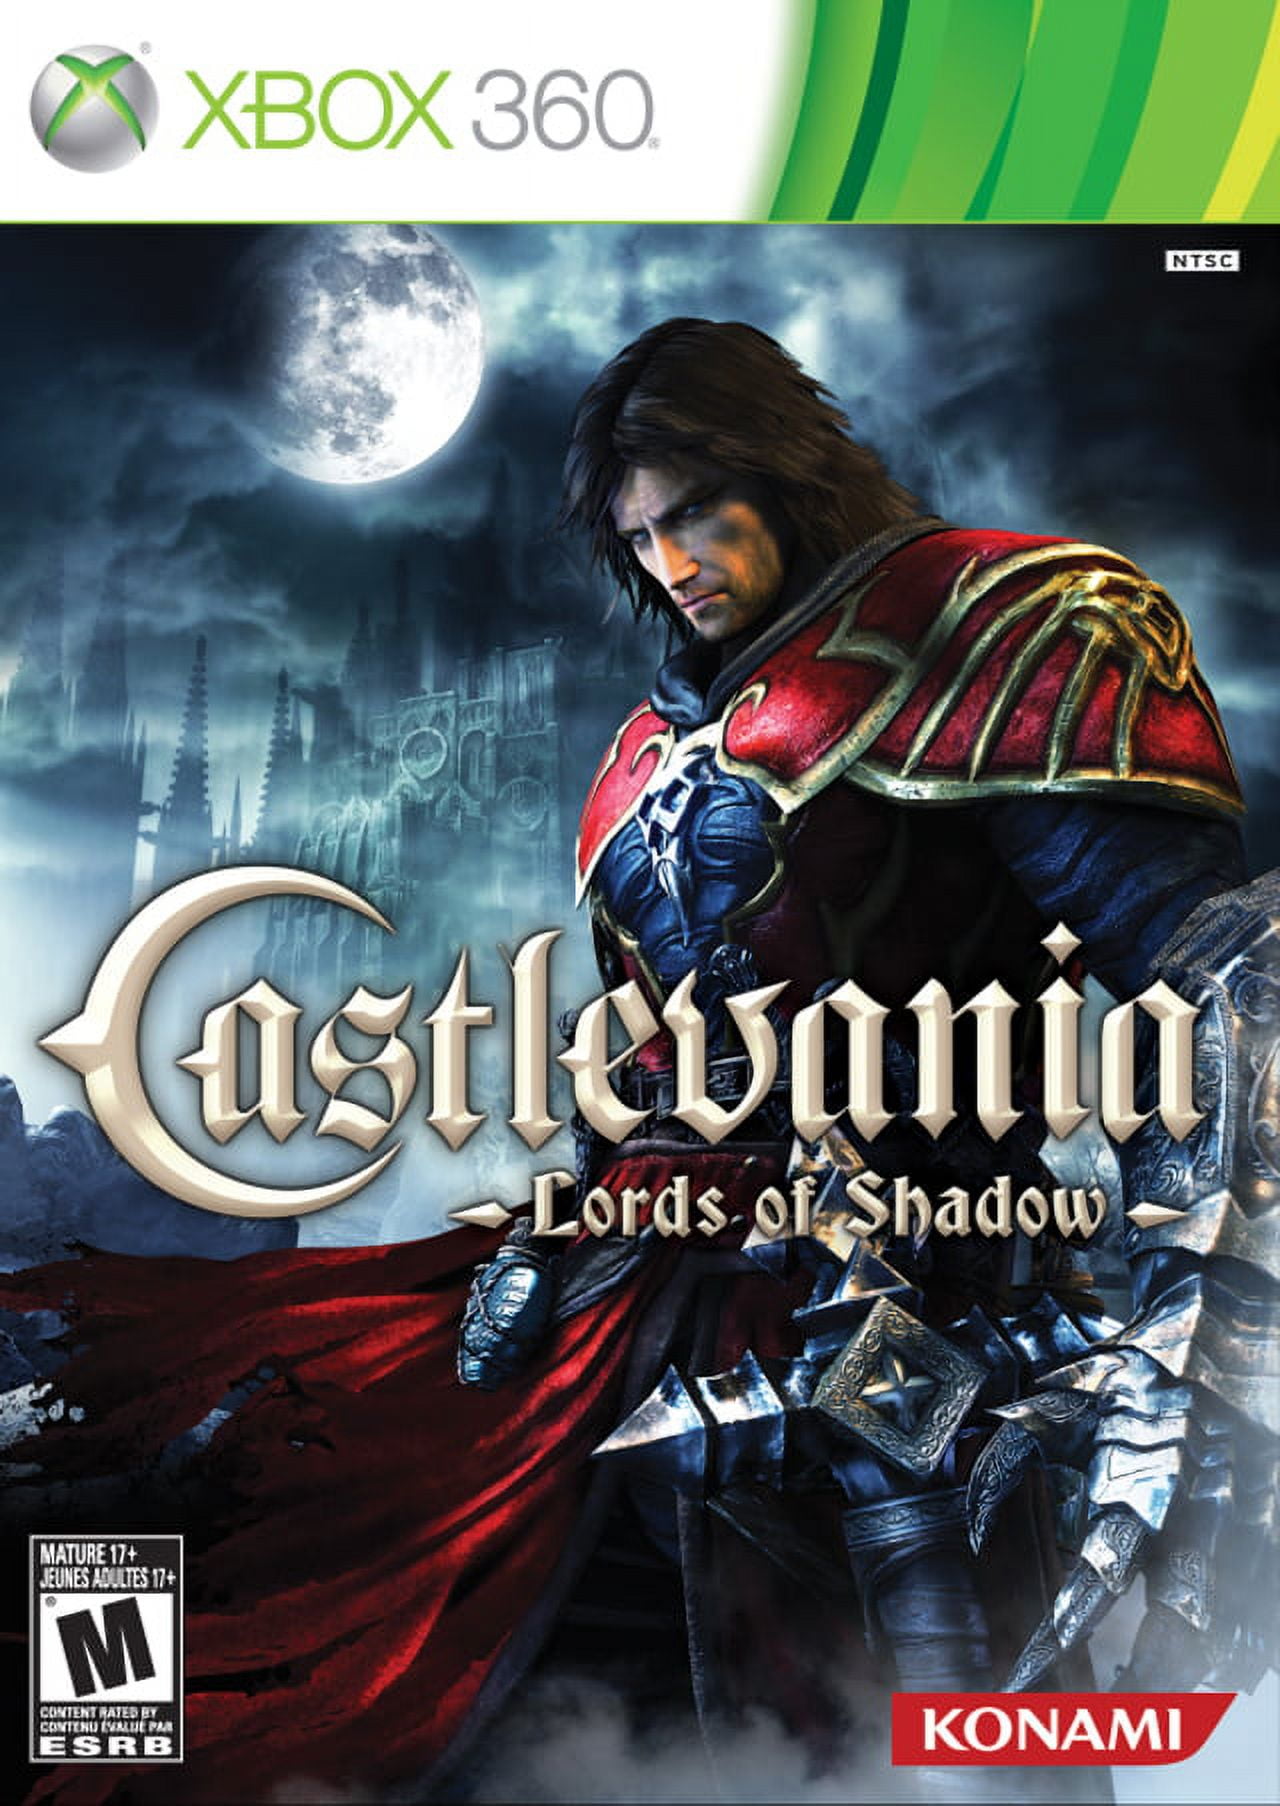 Konami Castlevania: Lords of Shadow (Xbox 360) 